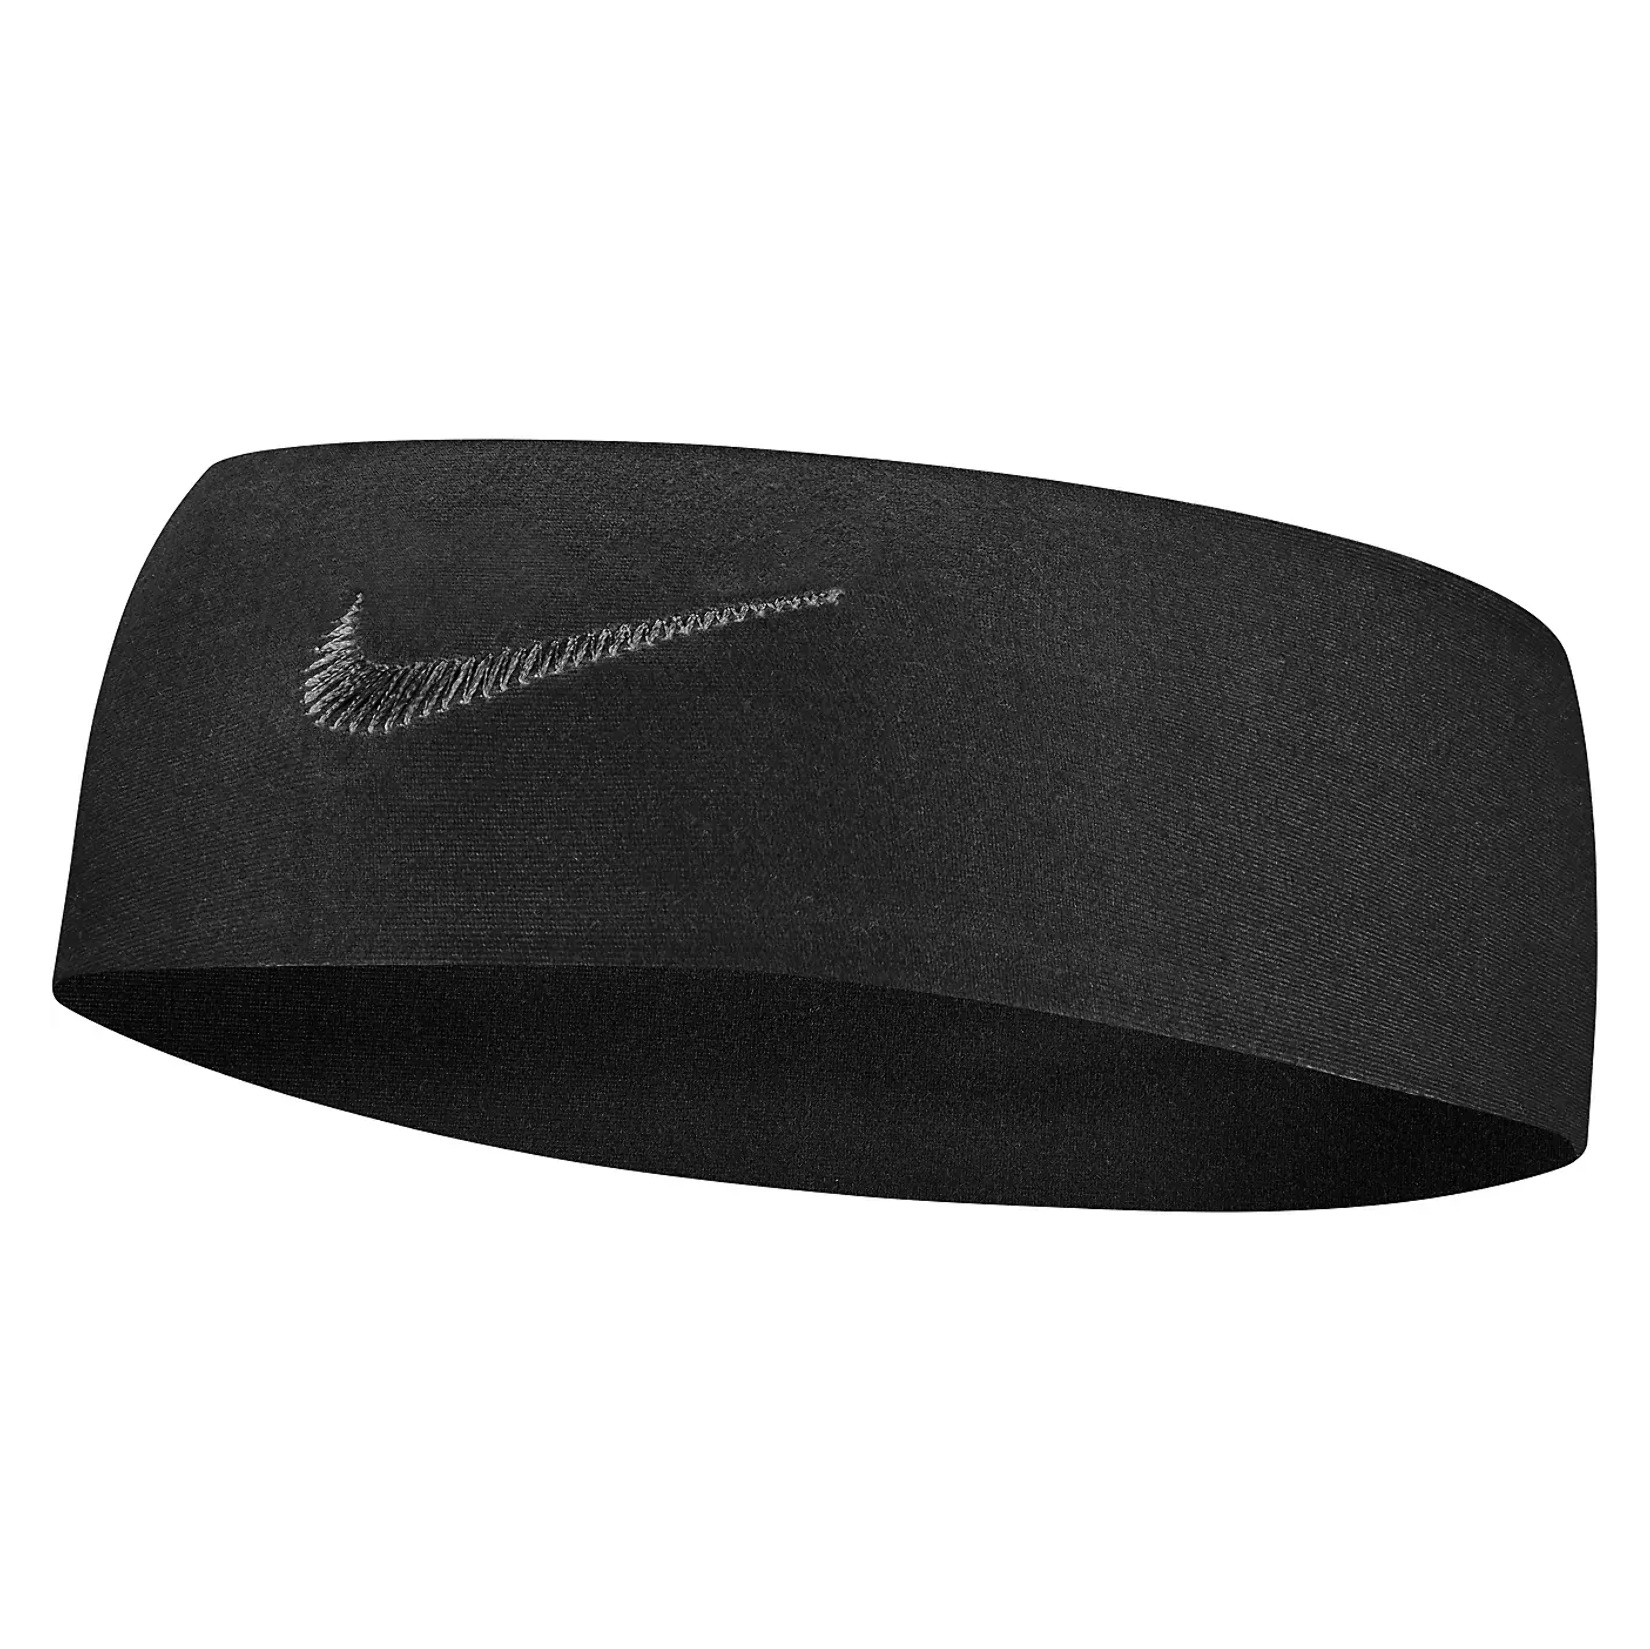 Nike Fury Headband - Kitlocker.com